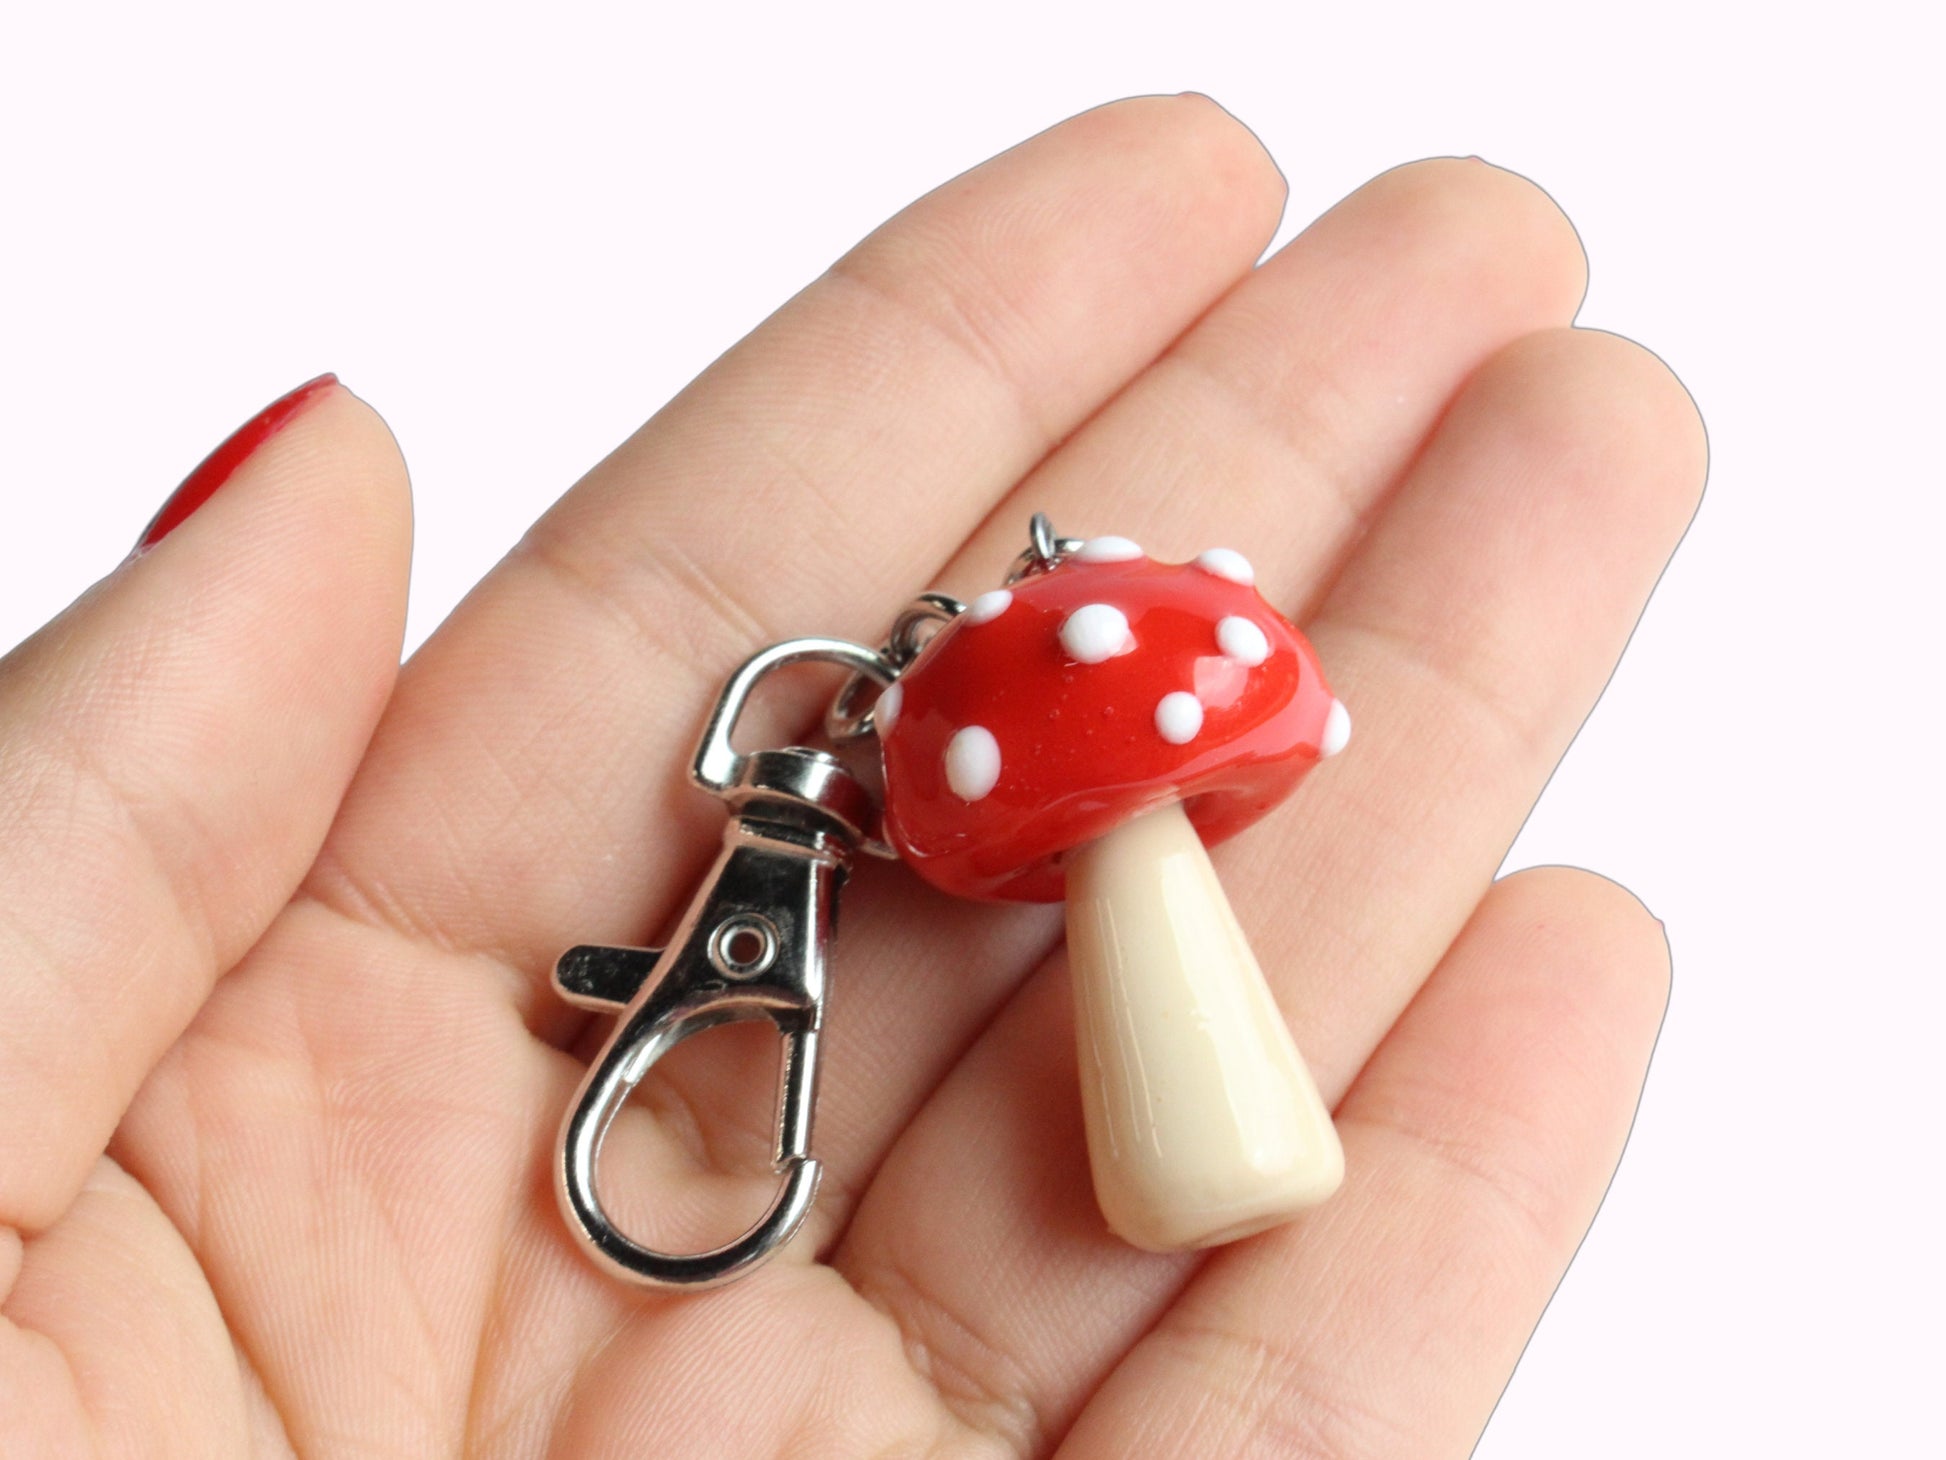 Red Mushroom Keychain